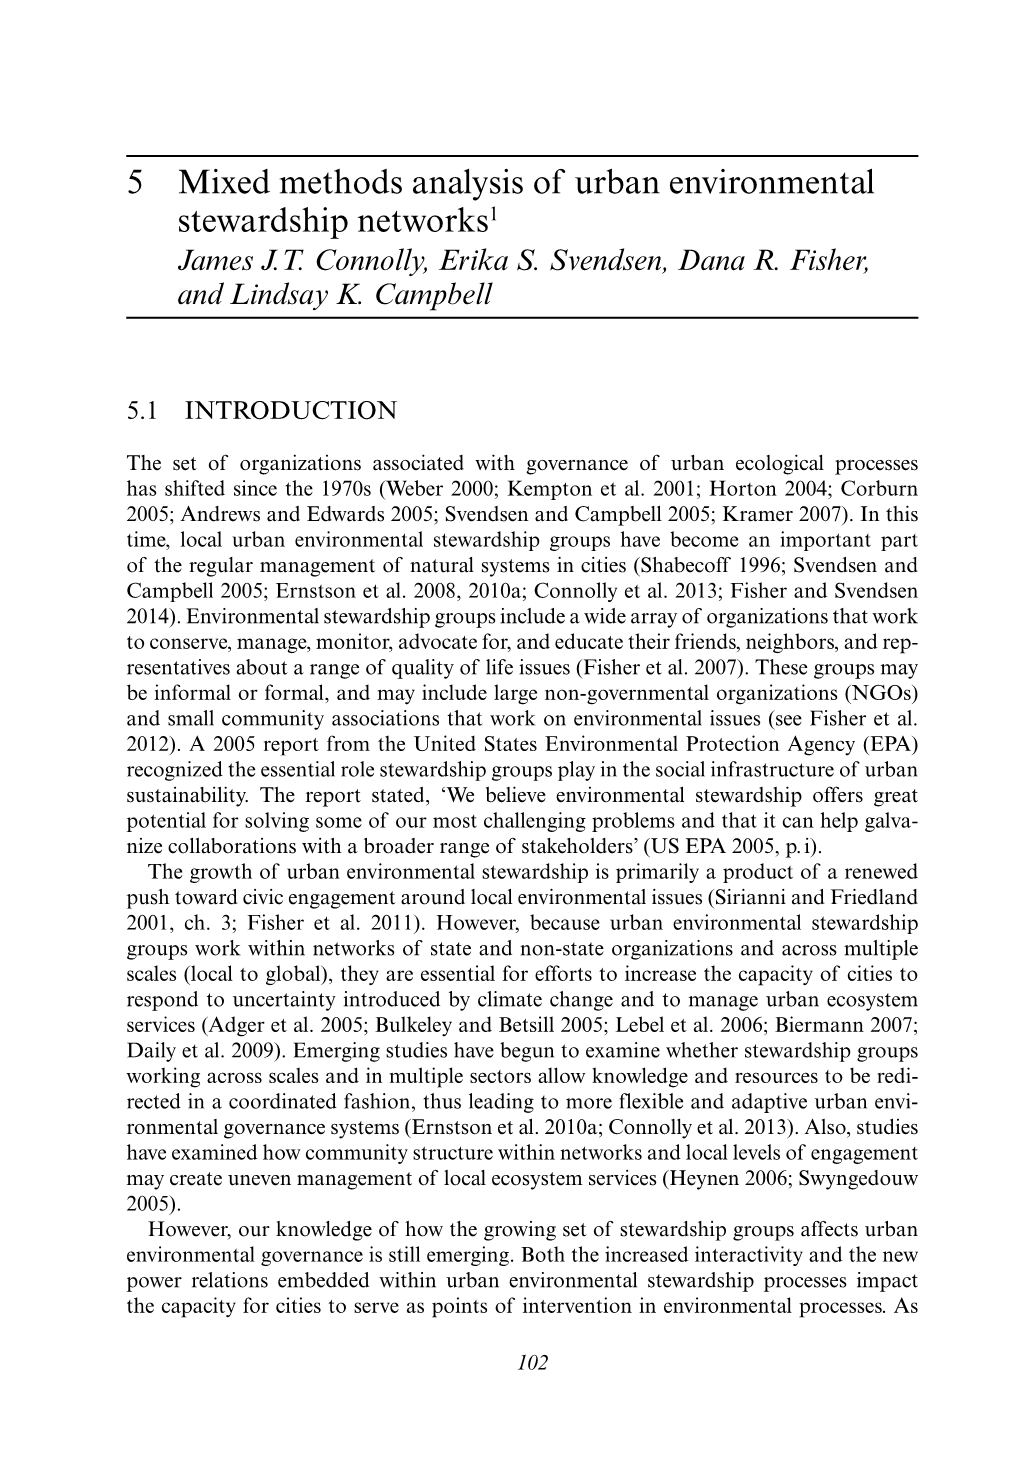 Mixed Methods Analysis of Urban Environmental Stewardship Networks1 James J.T